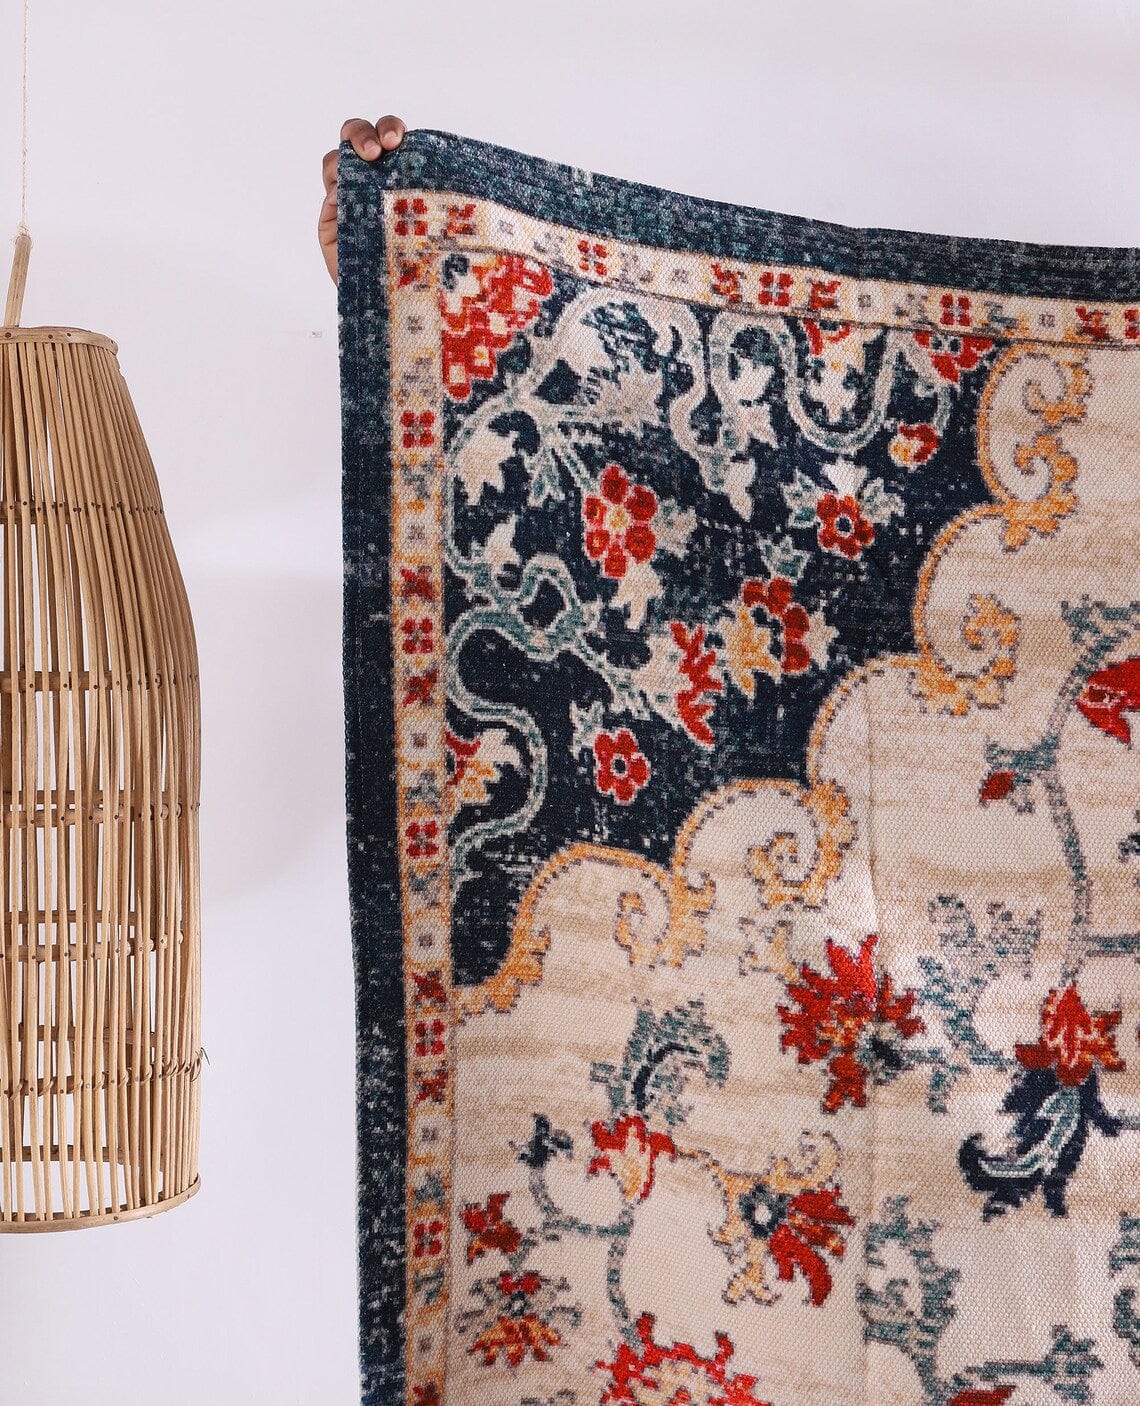 Handmade Turkish Kilim Rug for Living Room Decor - Large Area Rug